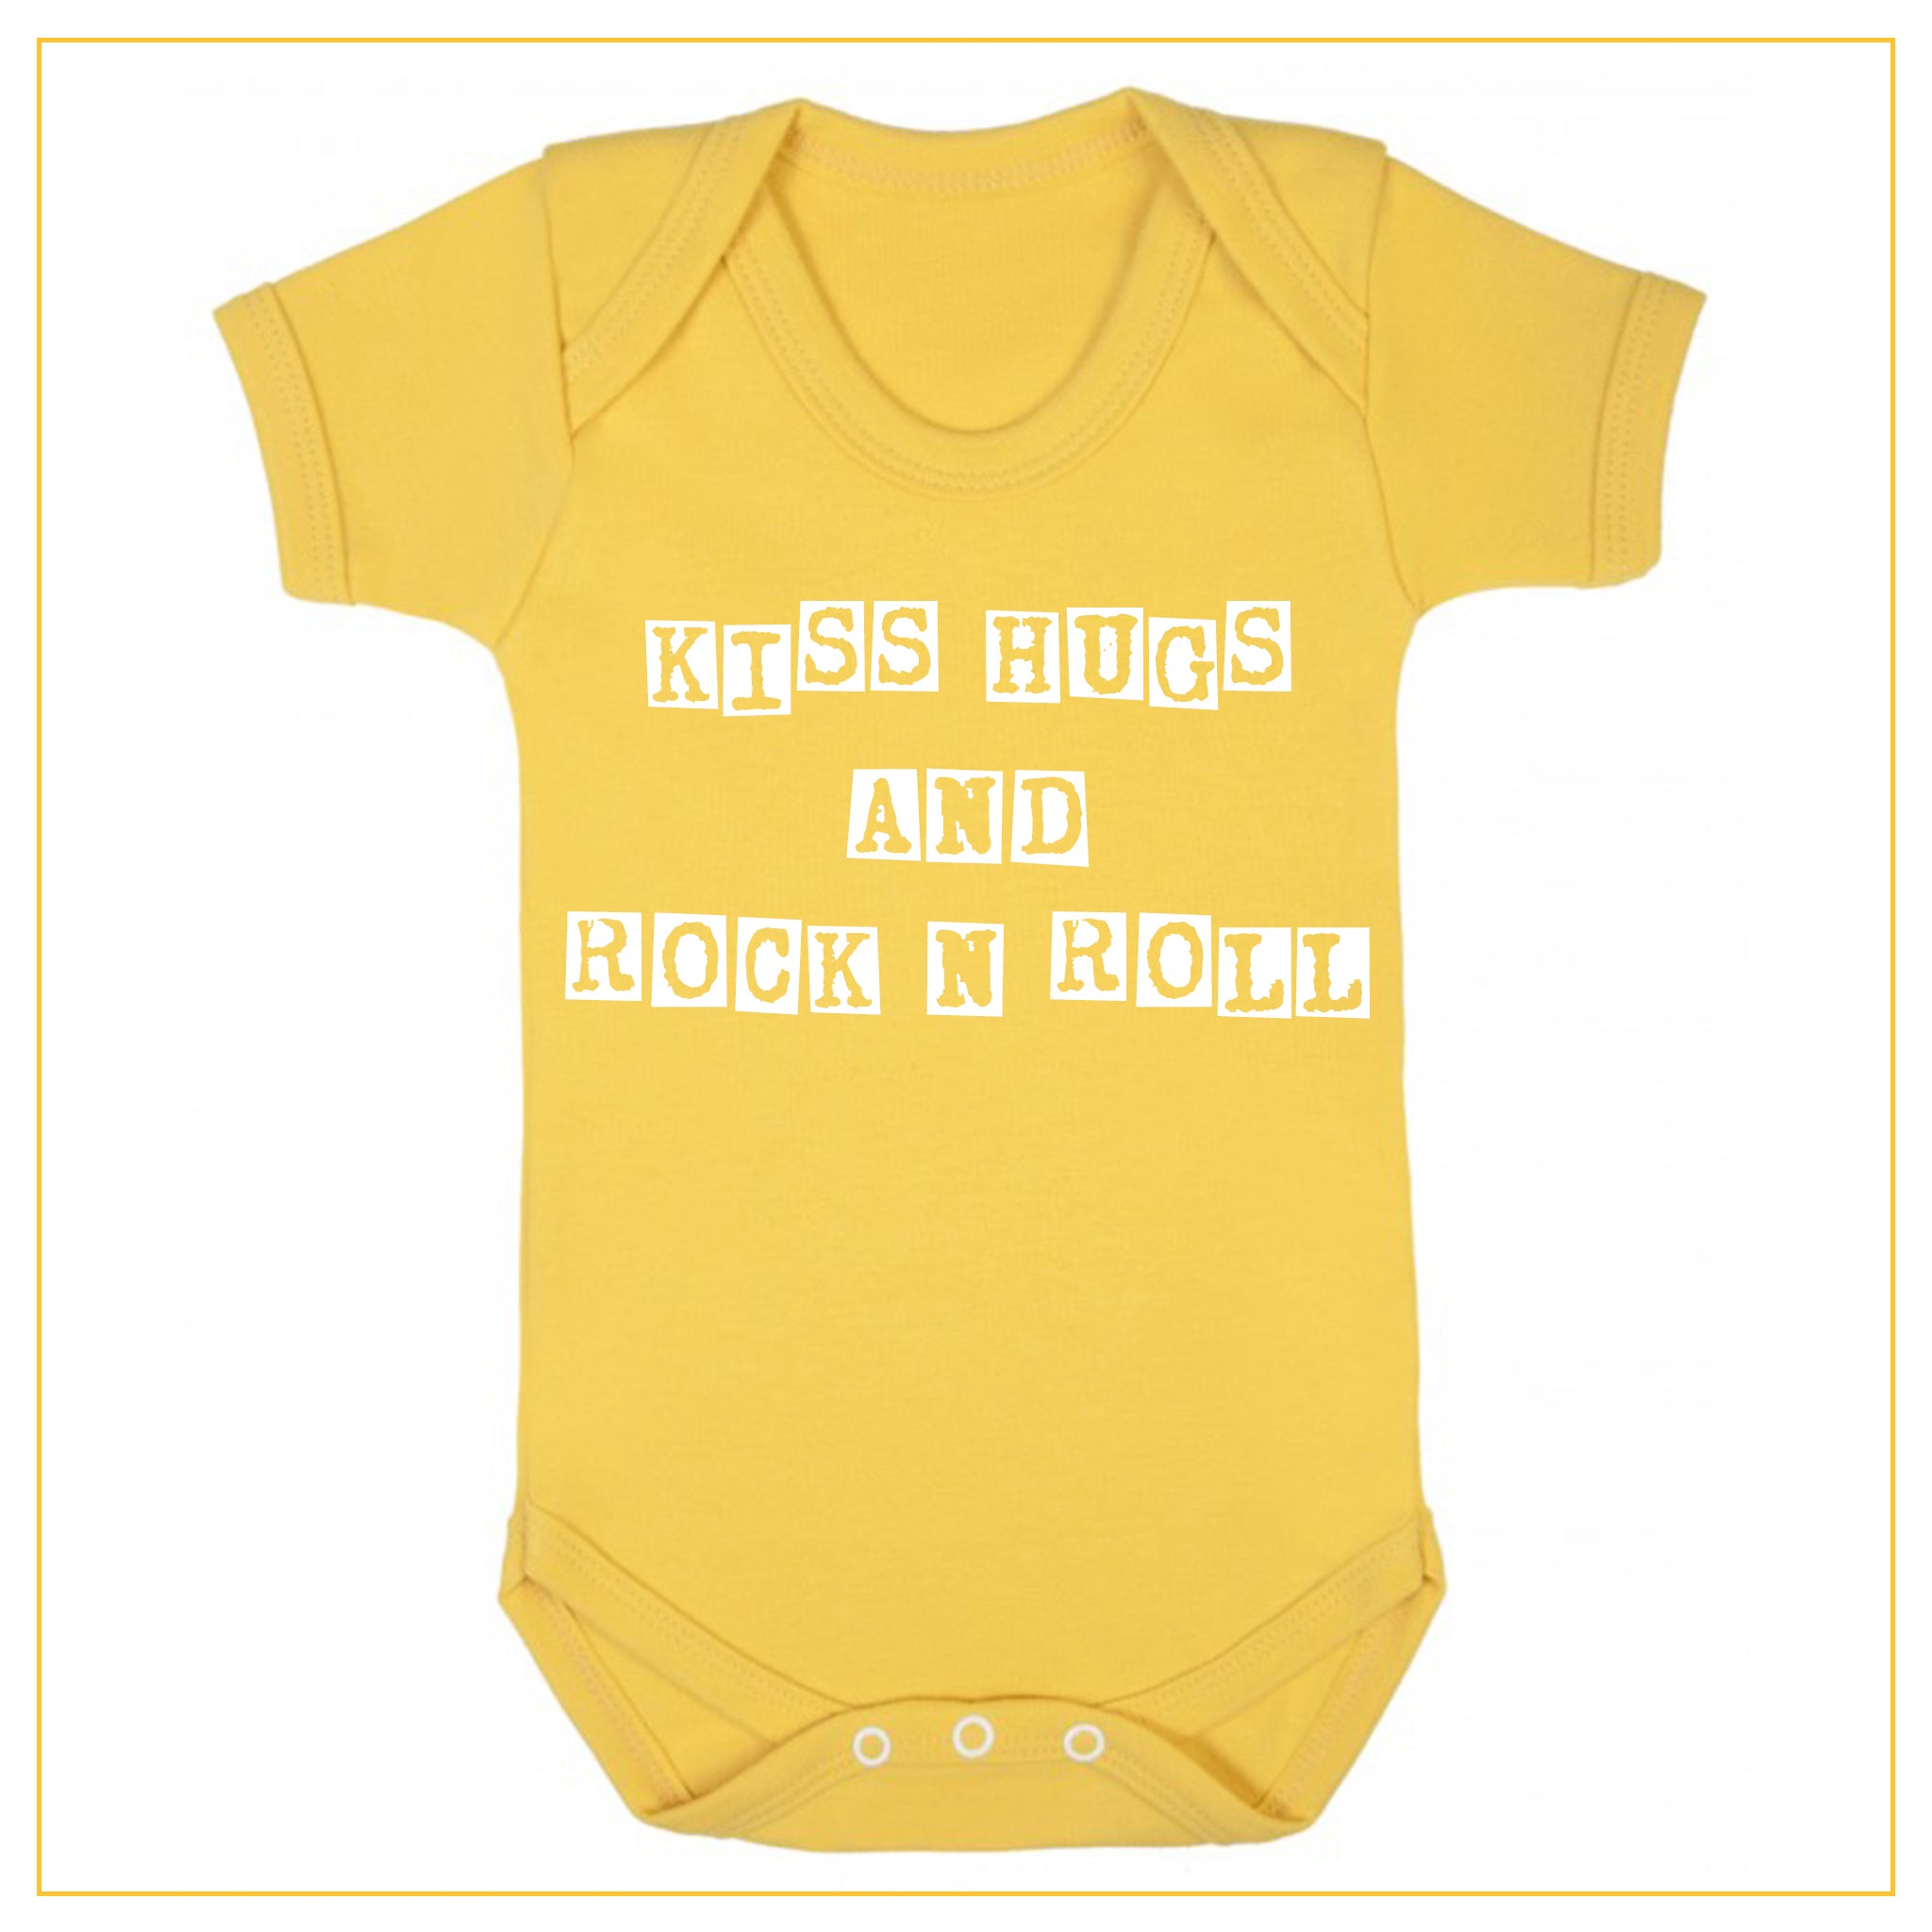 kiss hugs and rock n roll baby onesie in yellow